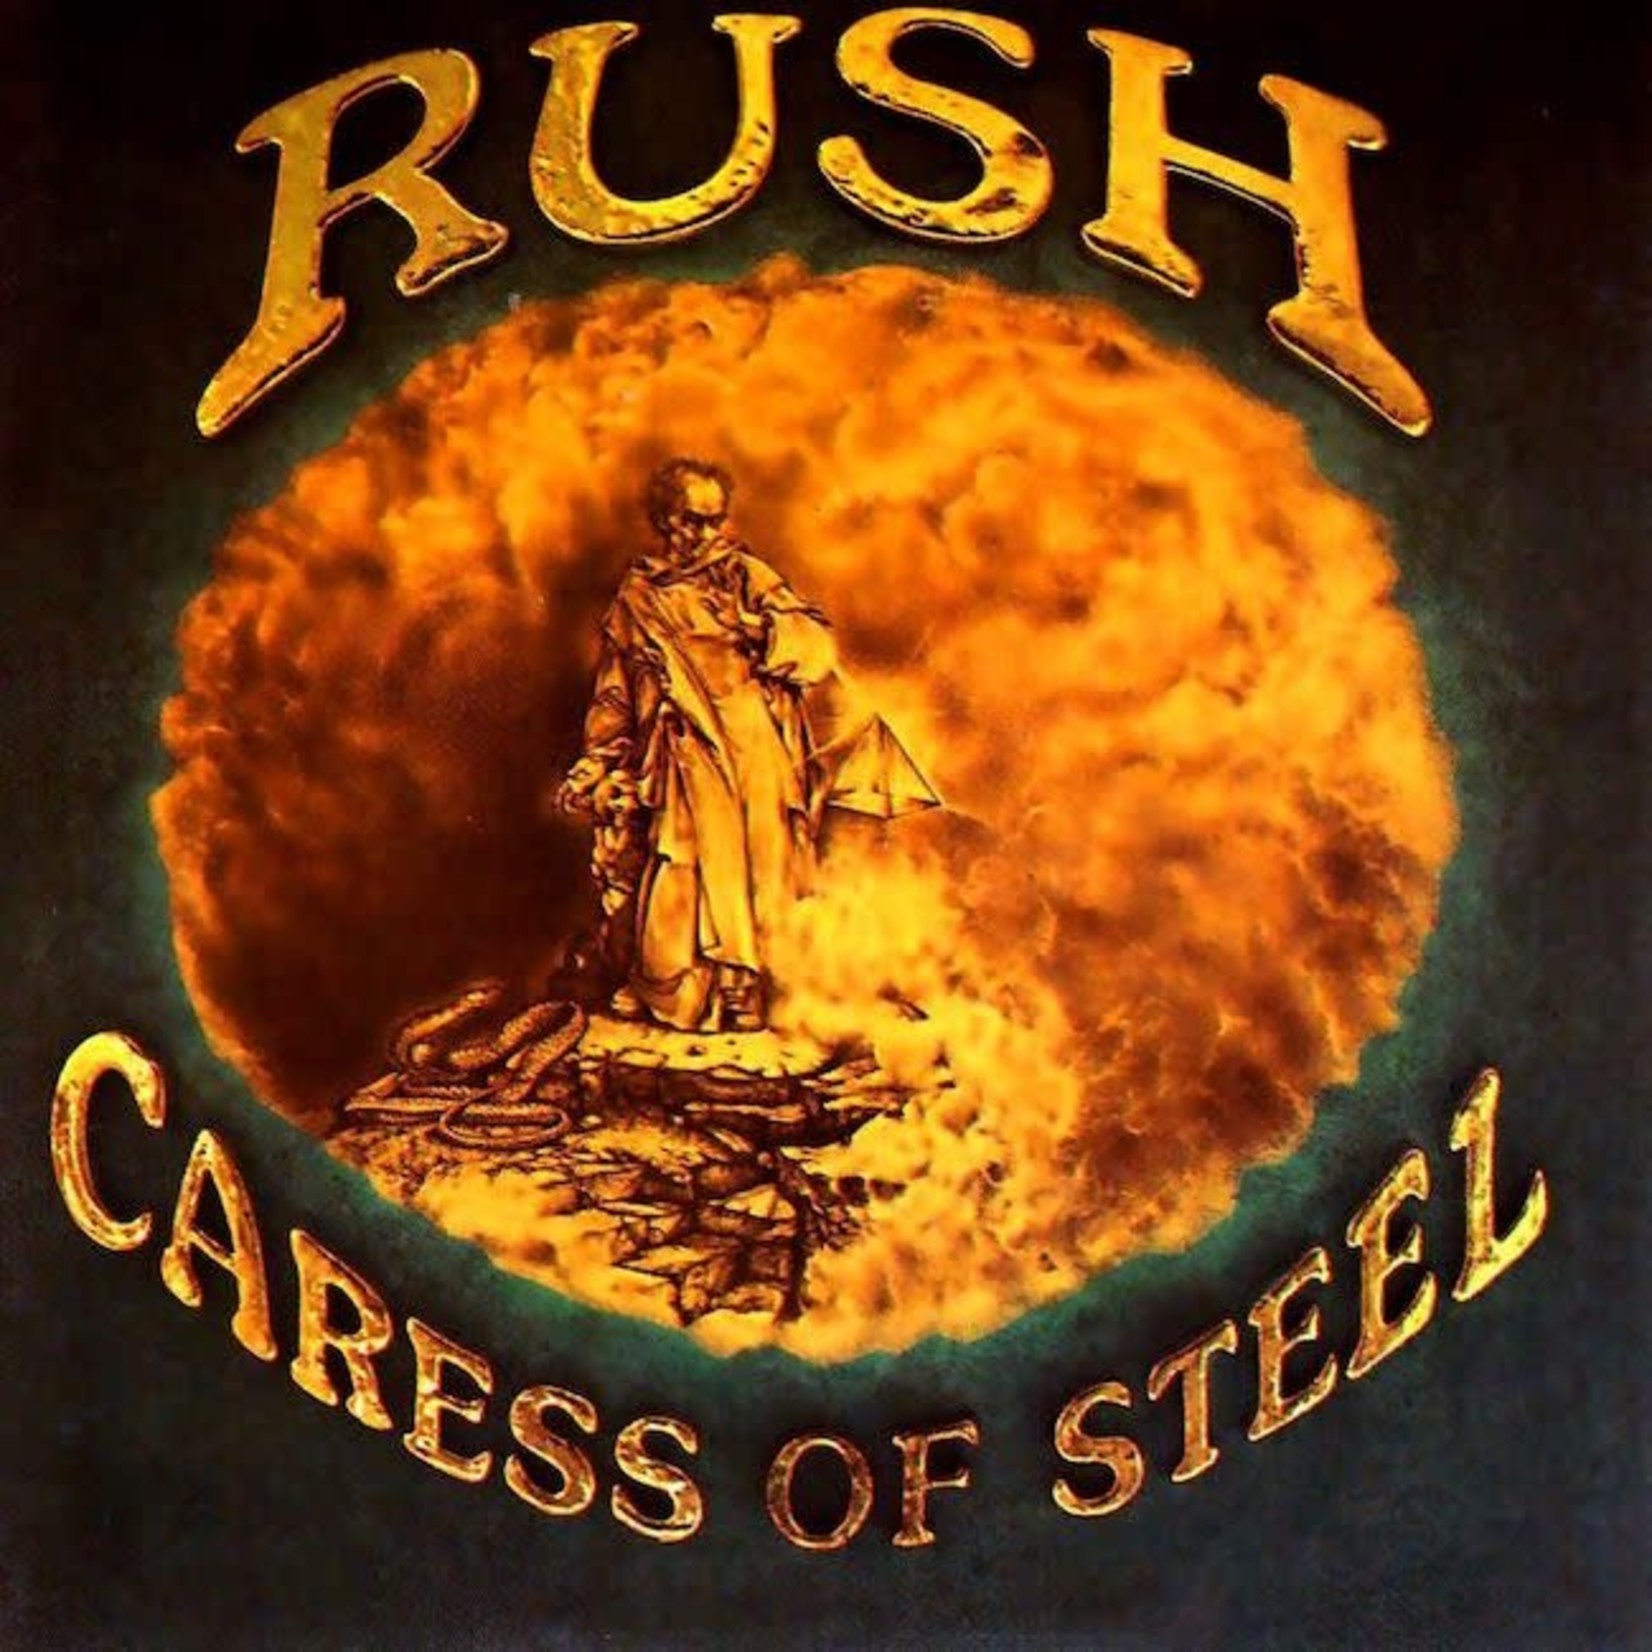 [Vintage] Rush - Caress of Steel (Mercury or Anthem label)